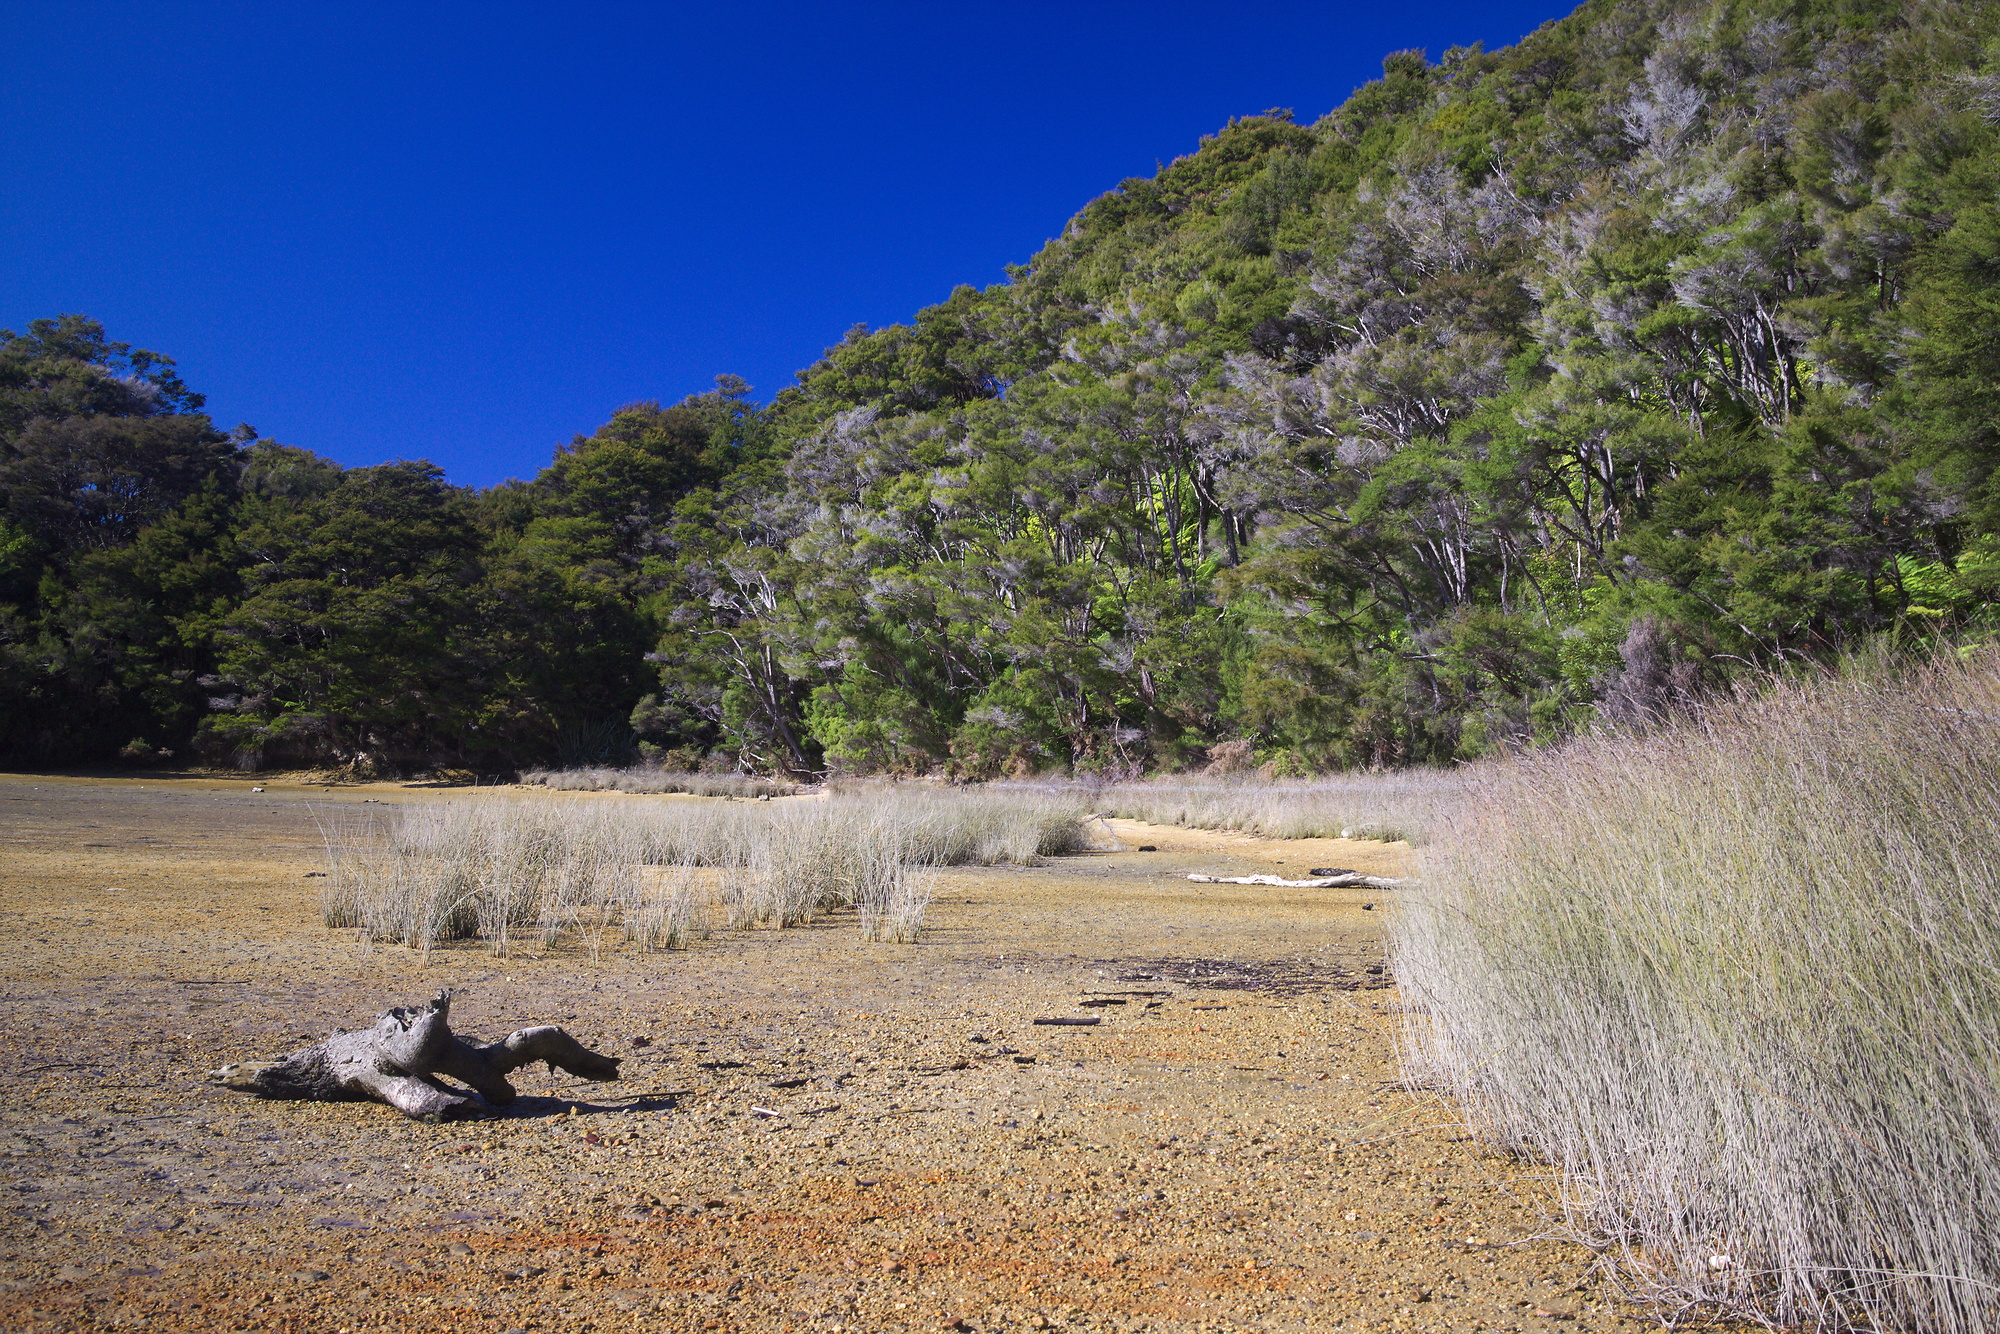 Awaroa Bay in Abel Tasman National Park